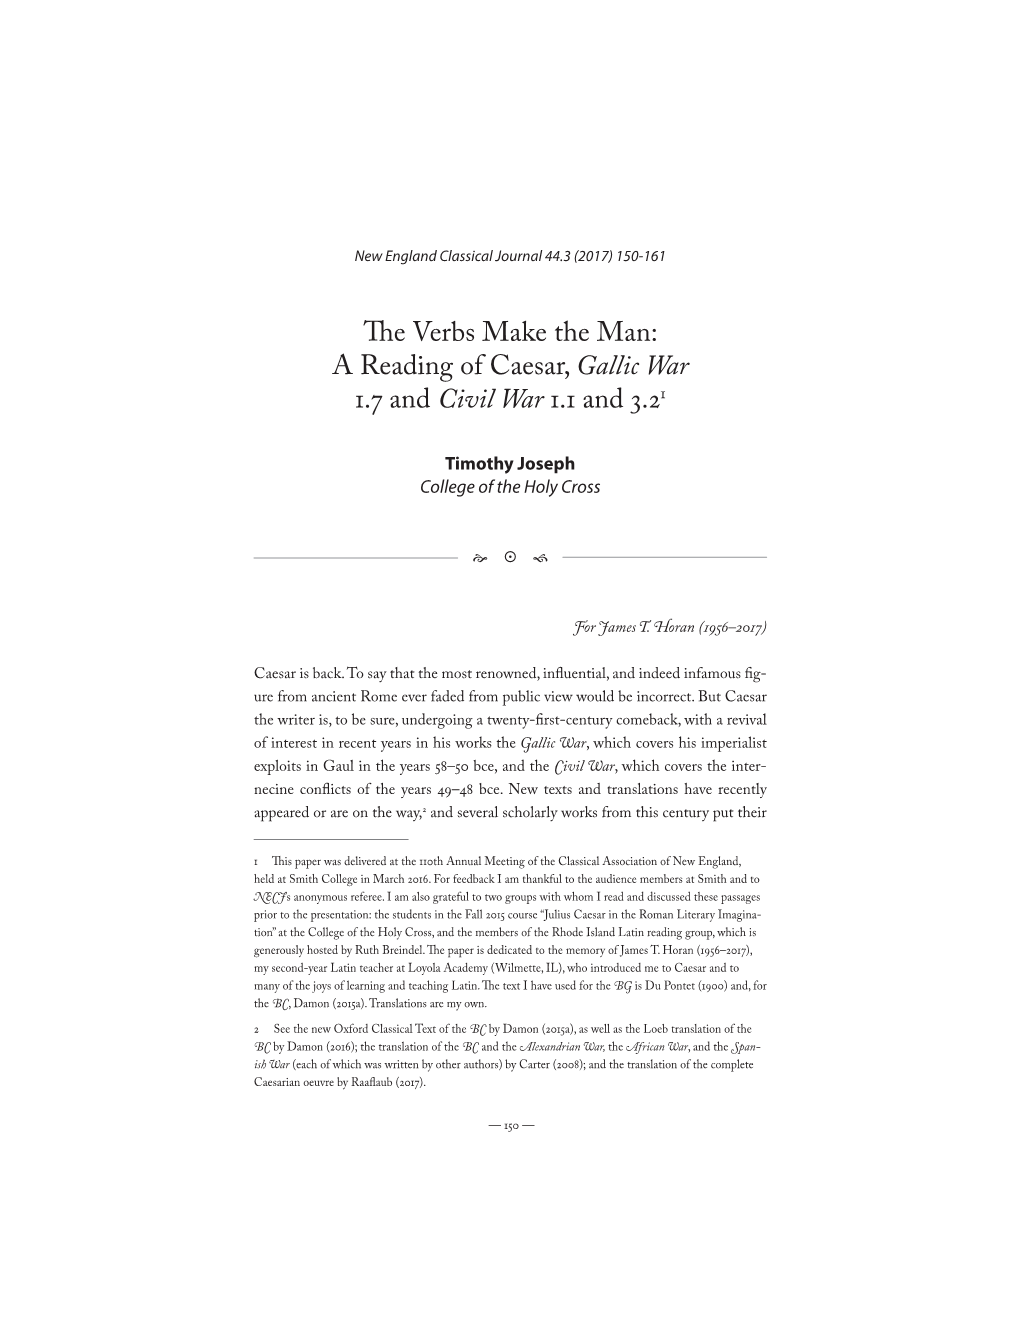 The Verbs Make the Man: a Reading of Caesar, Gallic War 1.7 and Civil